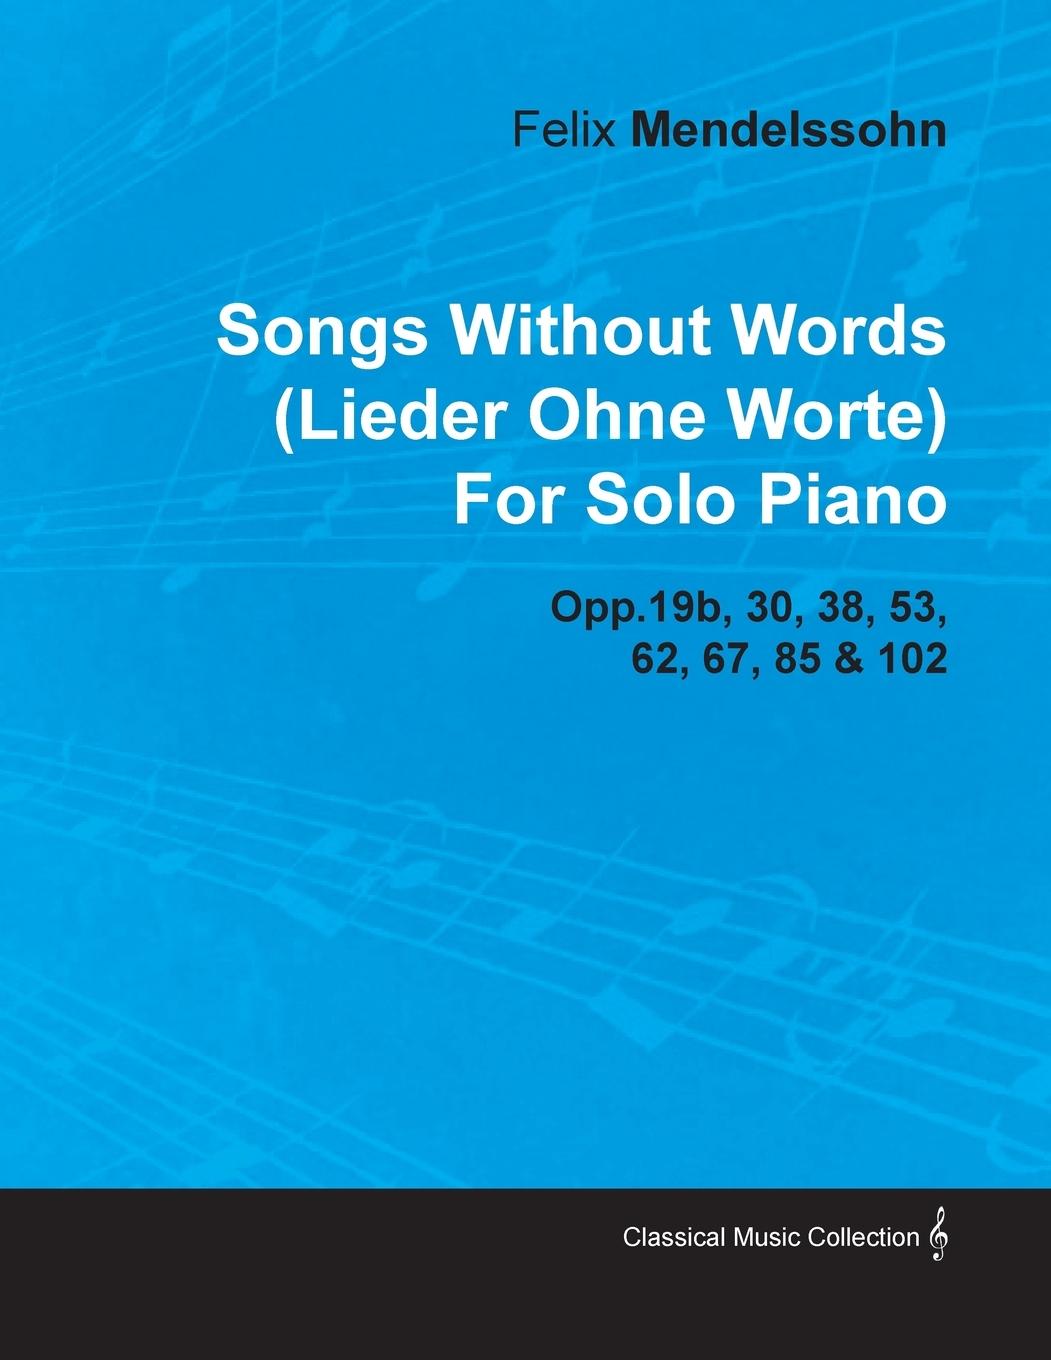 Songs Without Words (Lieder Ohne Worte) by Felix Mendelssohn for Solo Piano Opp.19b, 30, 38, 53, 62, 67, 85 & 102 - Mendelssohn, Felix